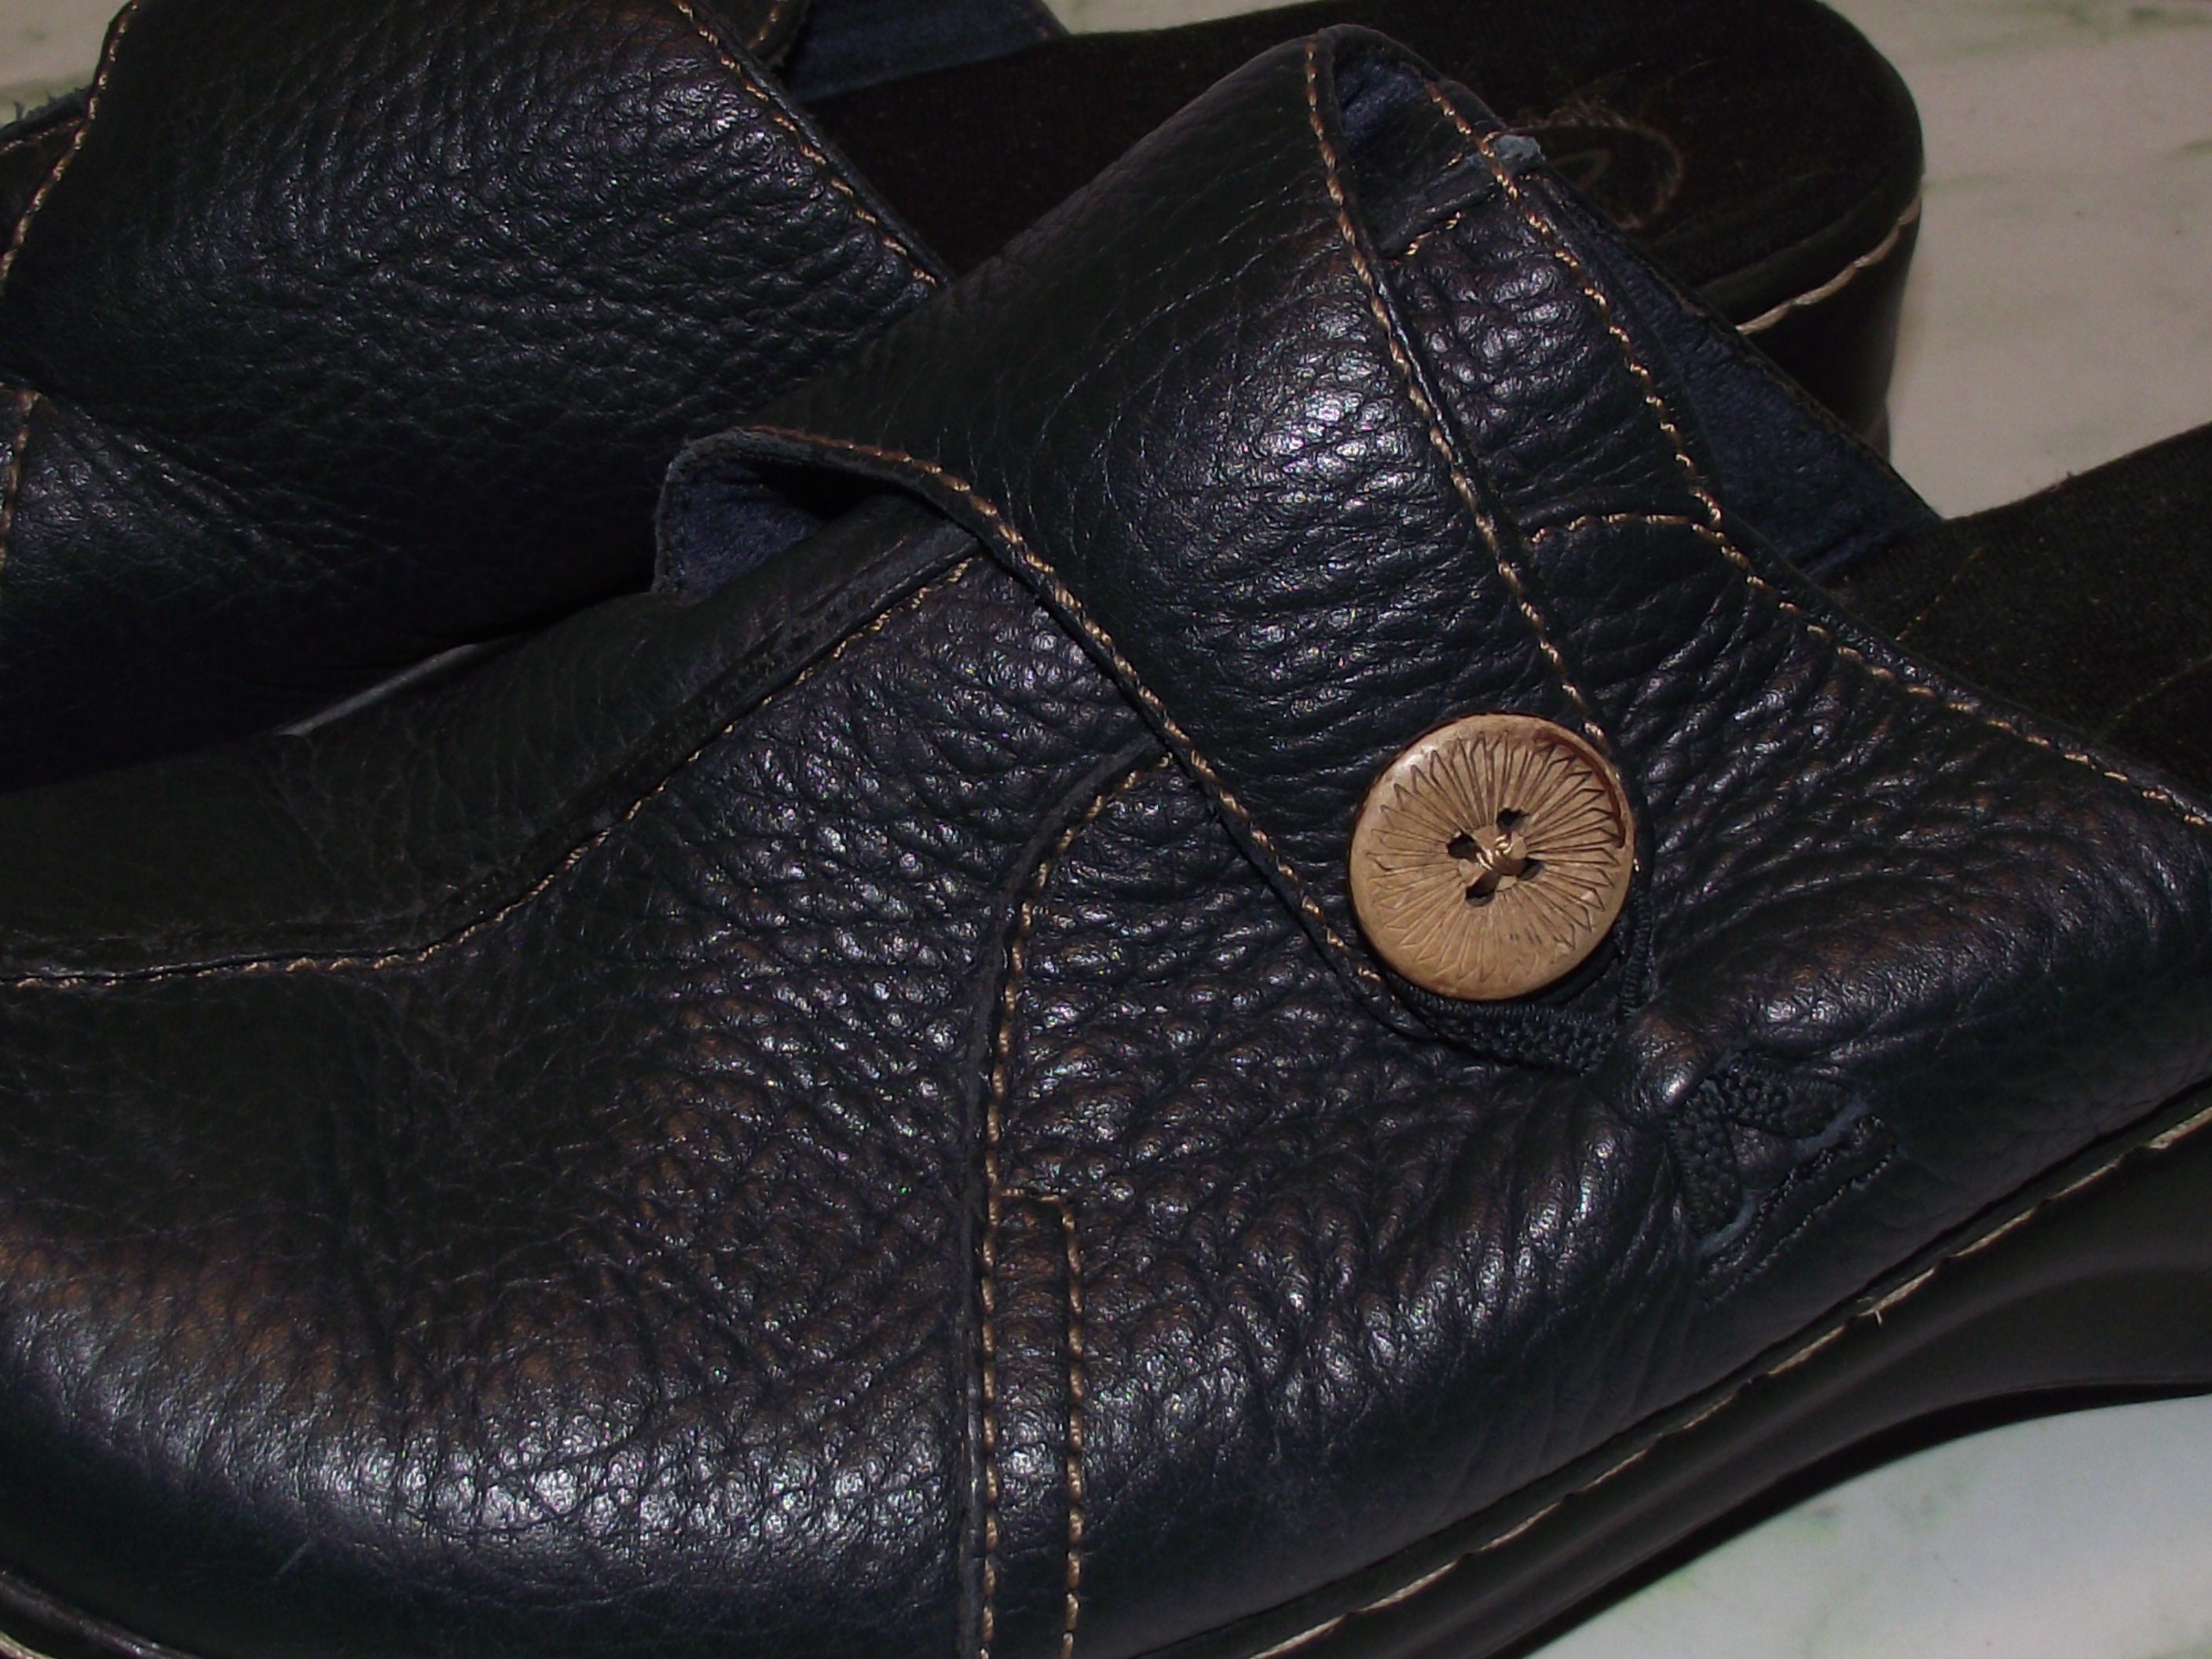 Men's Renegade Shoe in Black Soft Patent Leather - Thursday